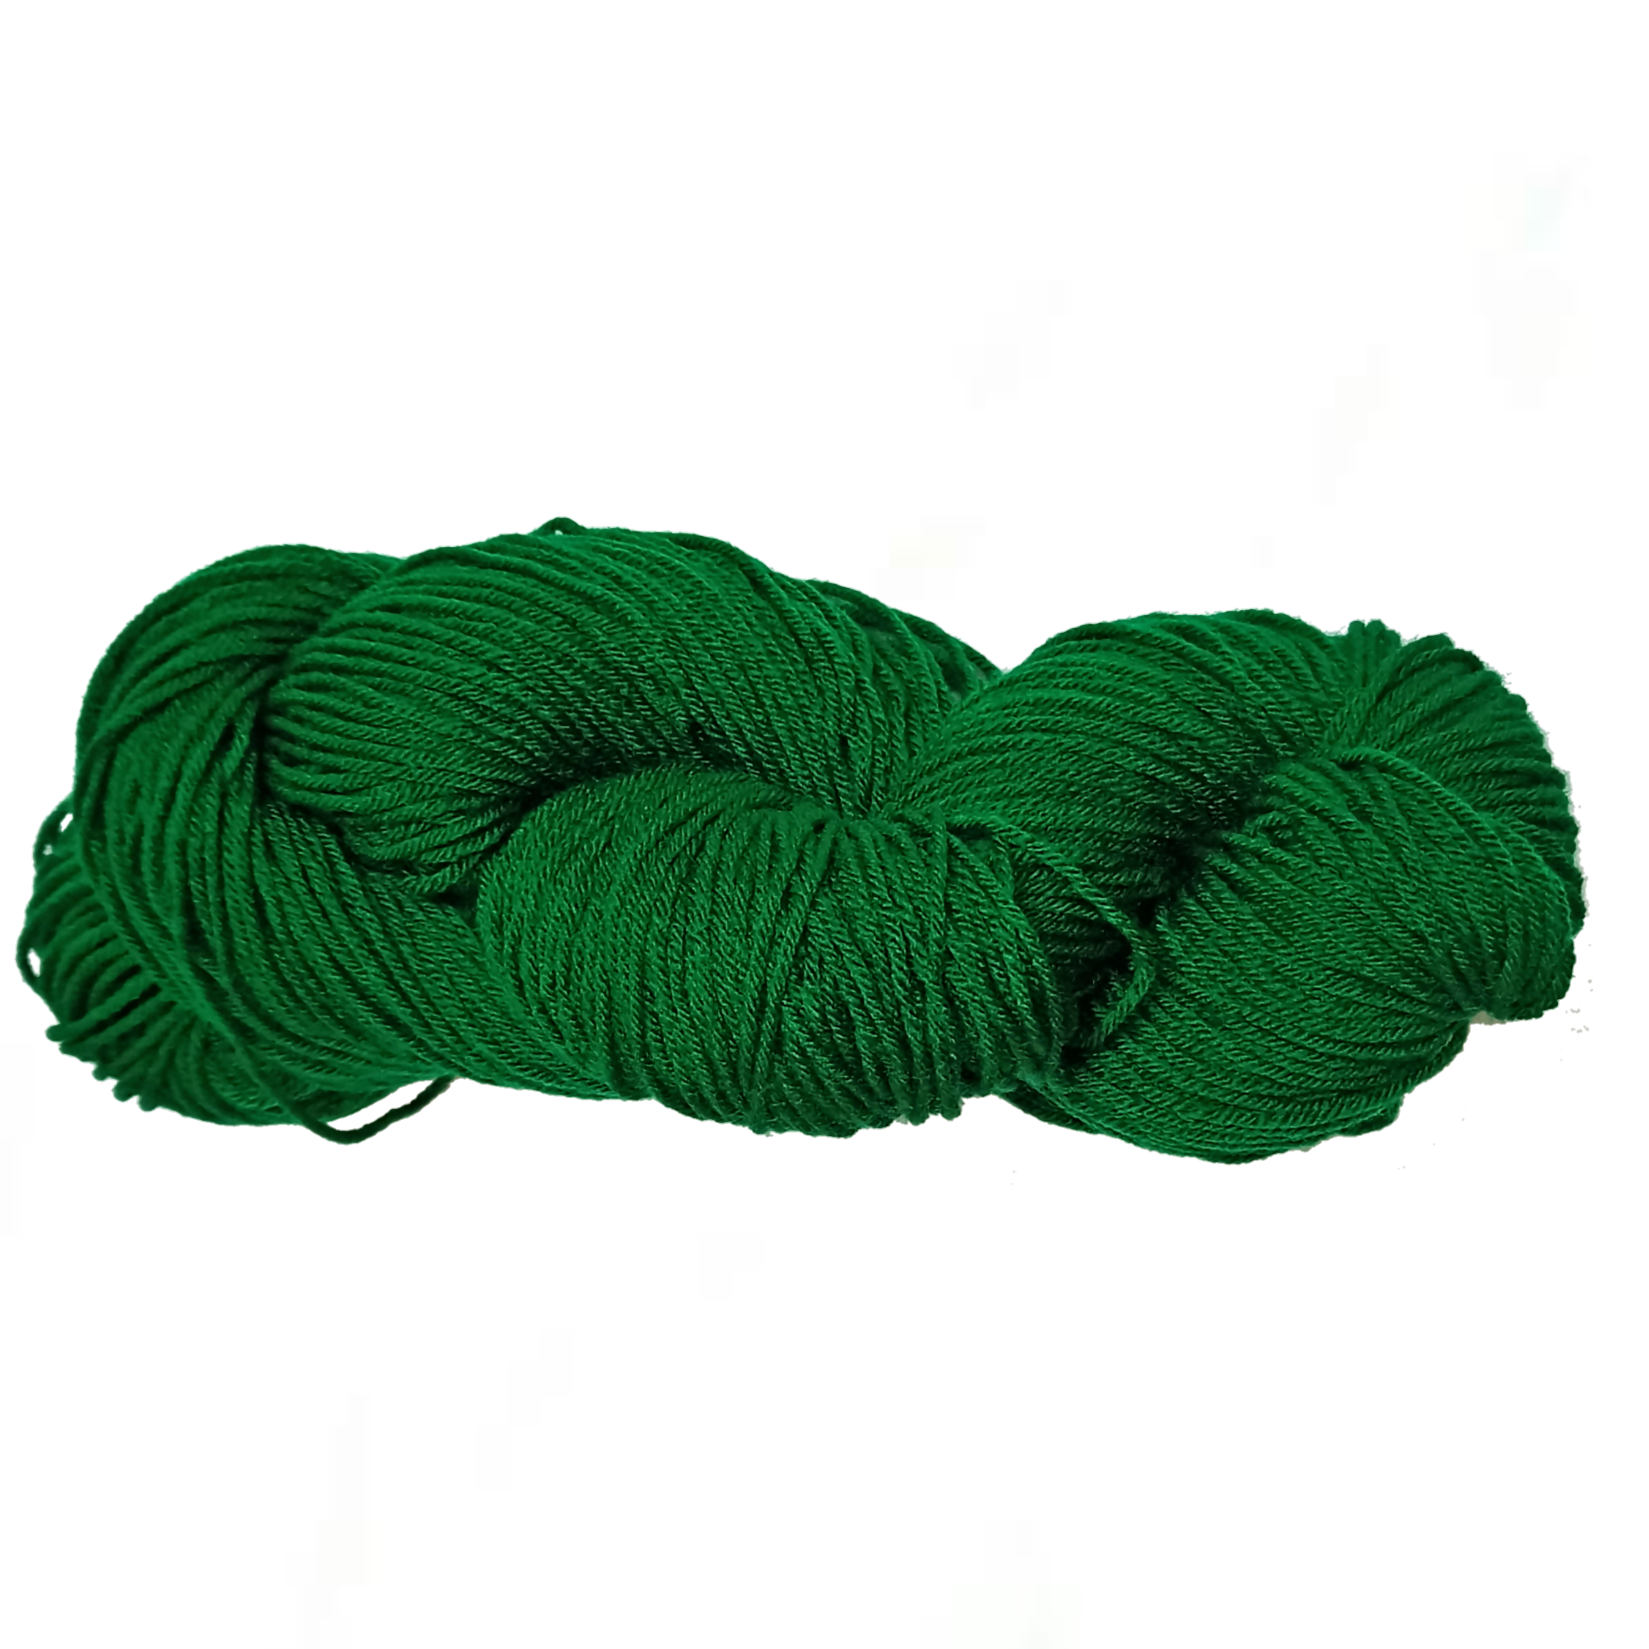 RR Dark Green 4 ply Wool Yarn for Knitting and Crochet Craft-200